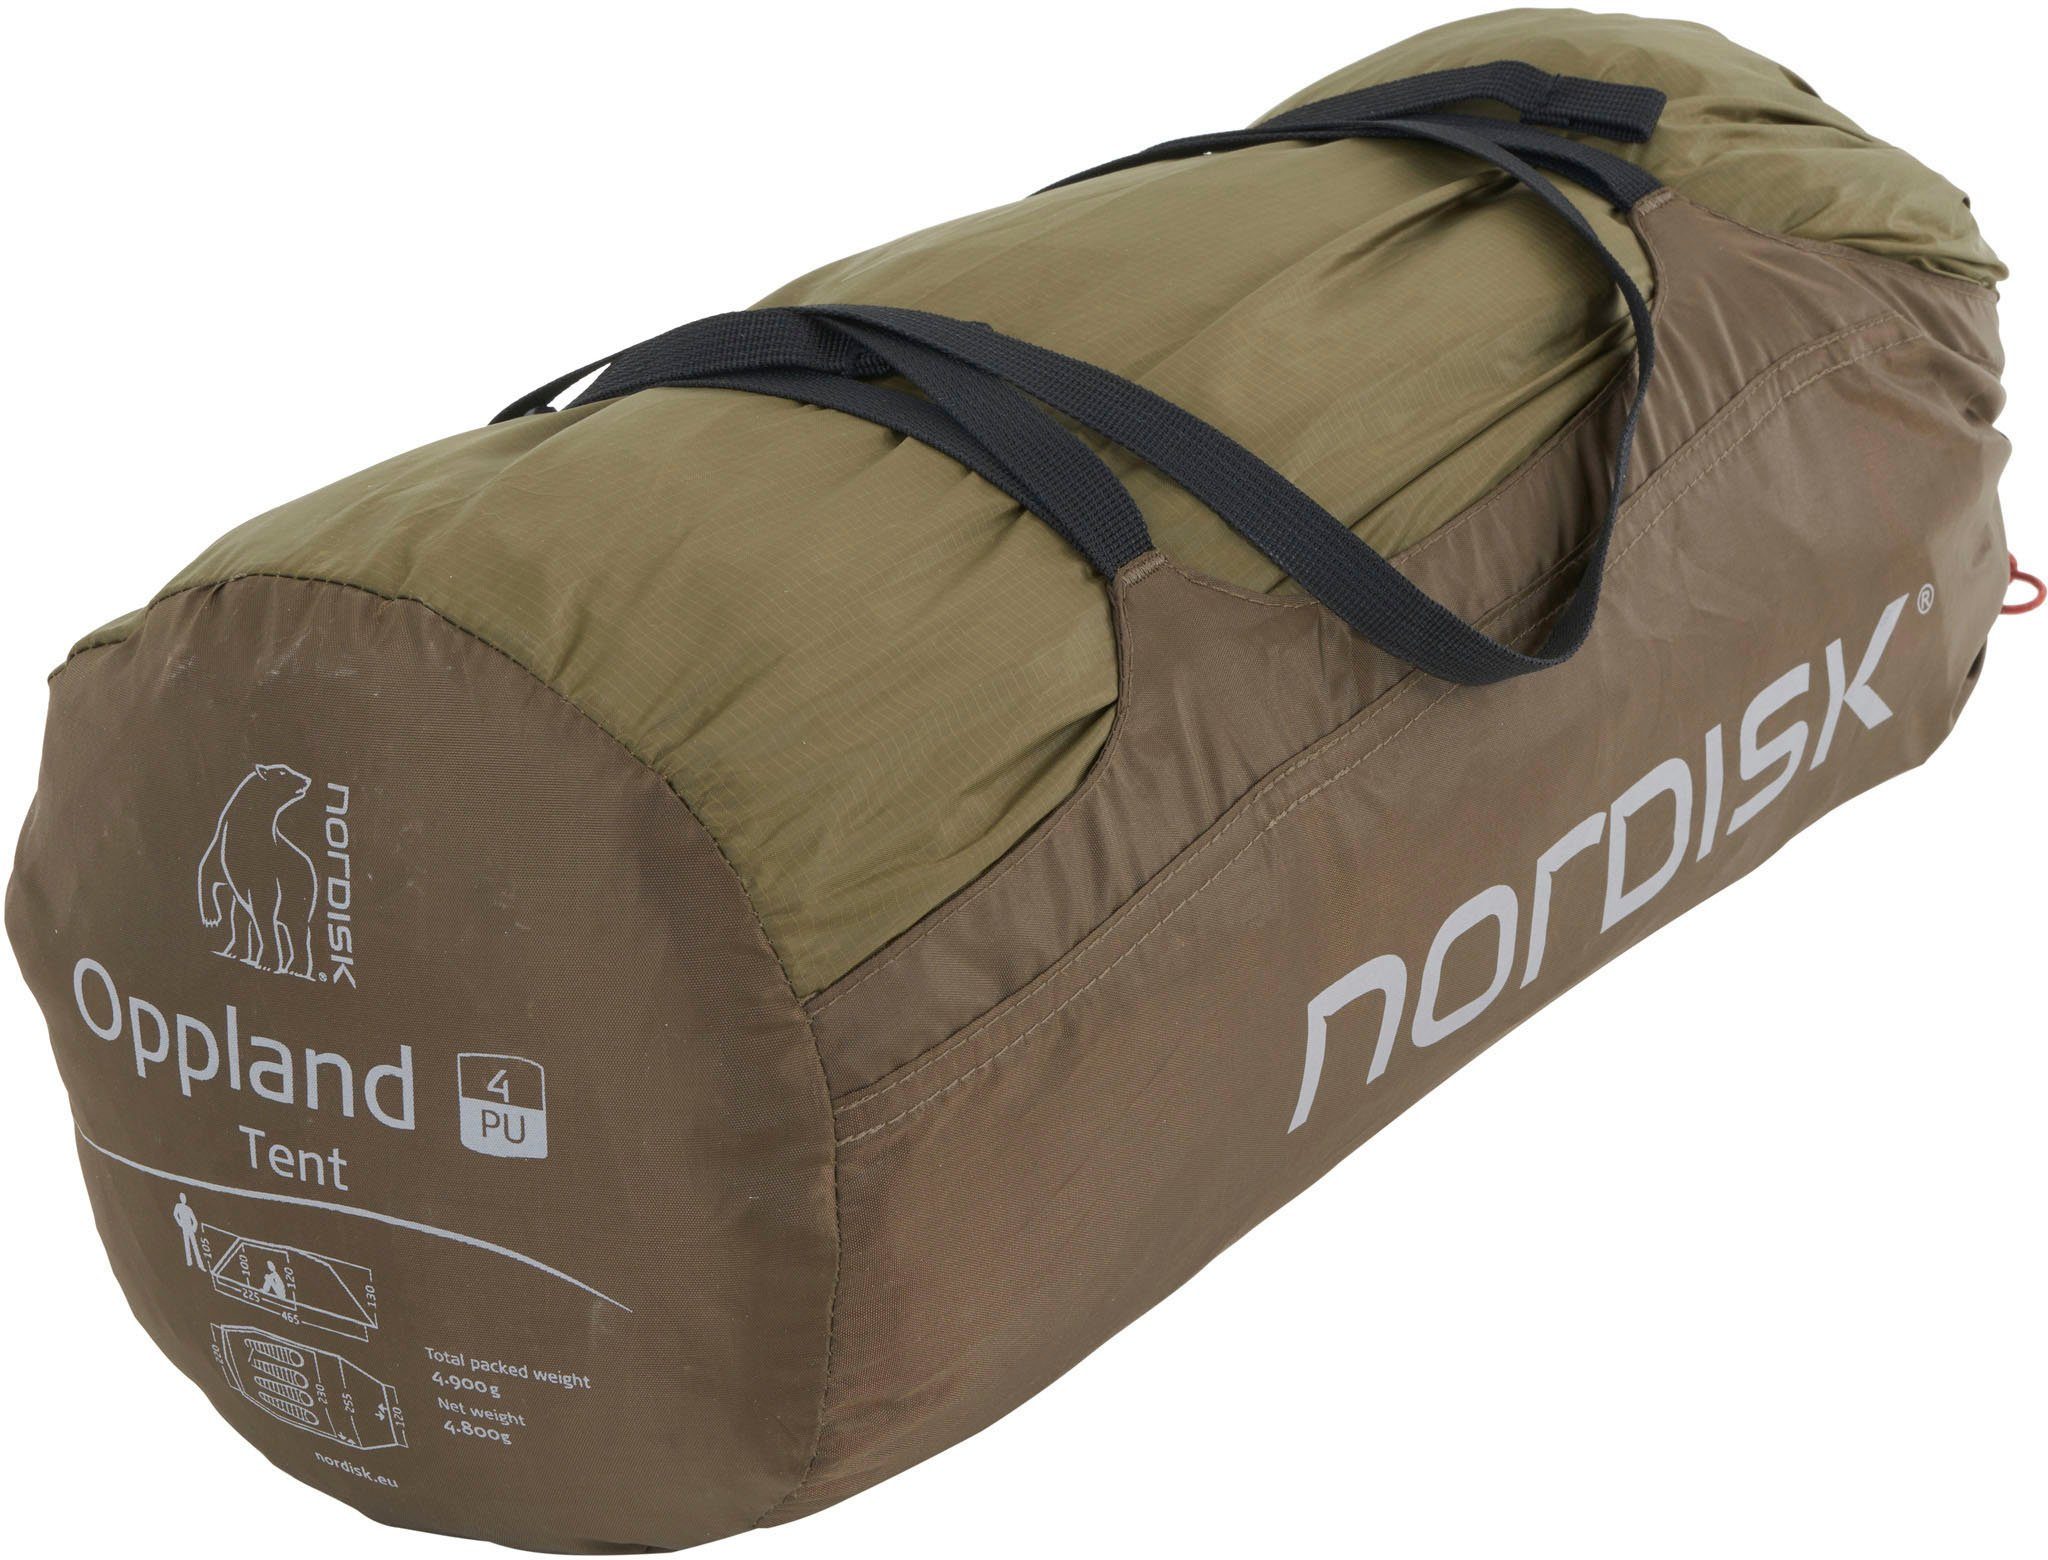 4 Personen: Tent 1 Olive, tlg) Oppland Dark 4 Nordisk (Packung, Tunnelzelt PU